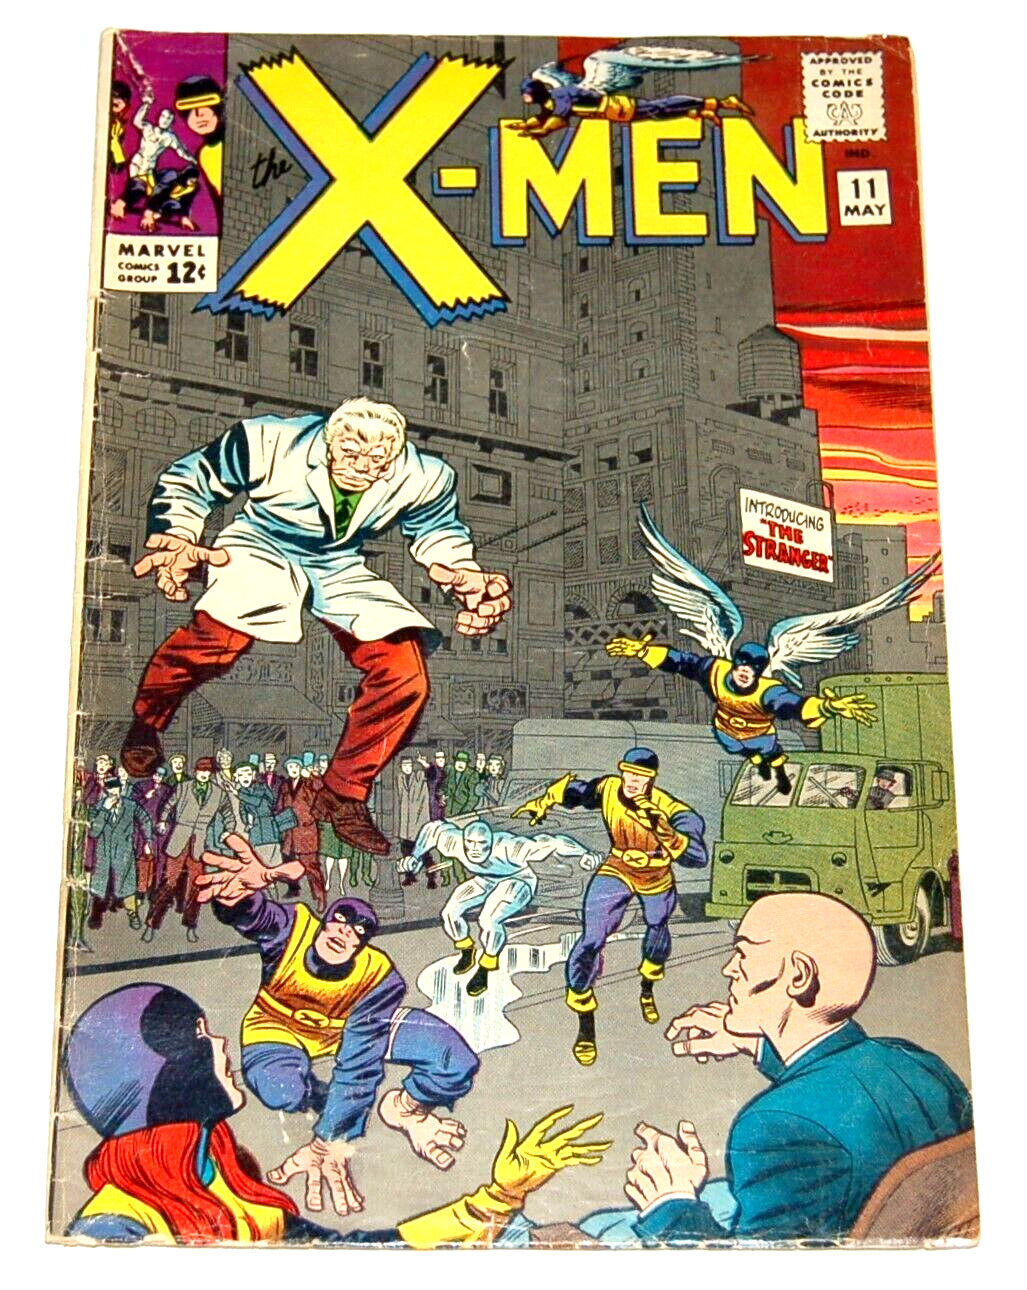 The X-Men #11 May 1965 Marvel ComicTriumph of Magneto The Stranger 12¢ C115